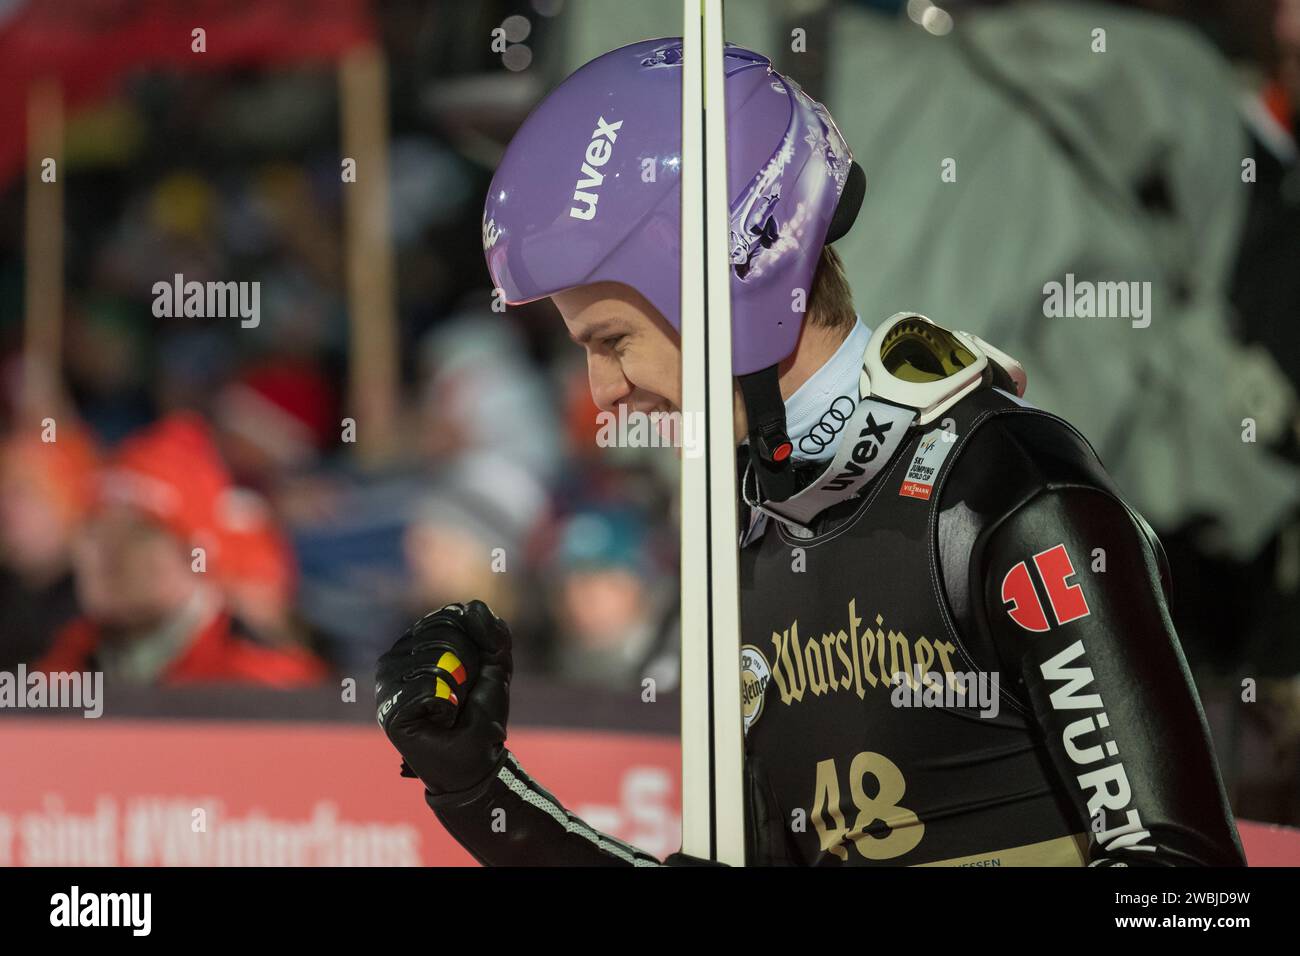 Andreas Wellinger Jubel, Freude, Jubilation, positiv, positively, FIS Skisprung Welt Cup in Willingen, Deutschland am 03.02.2018 Stock Photo